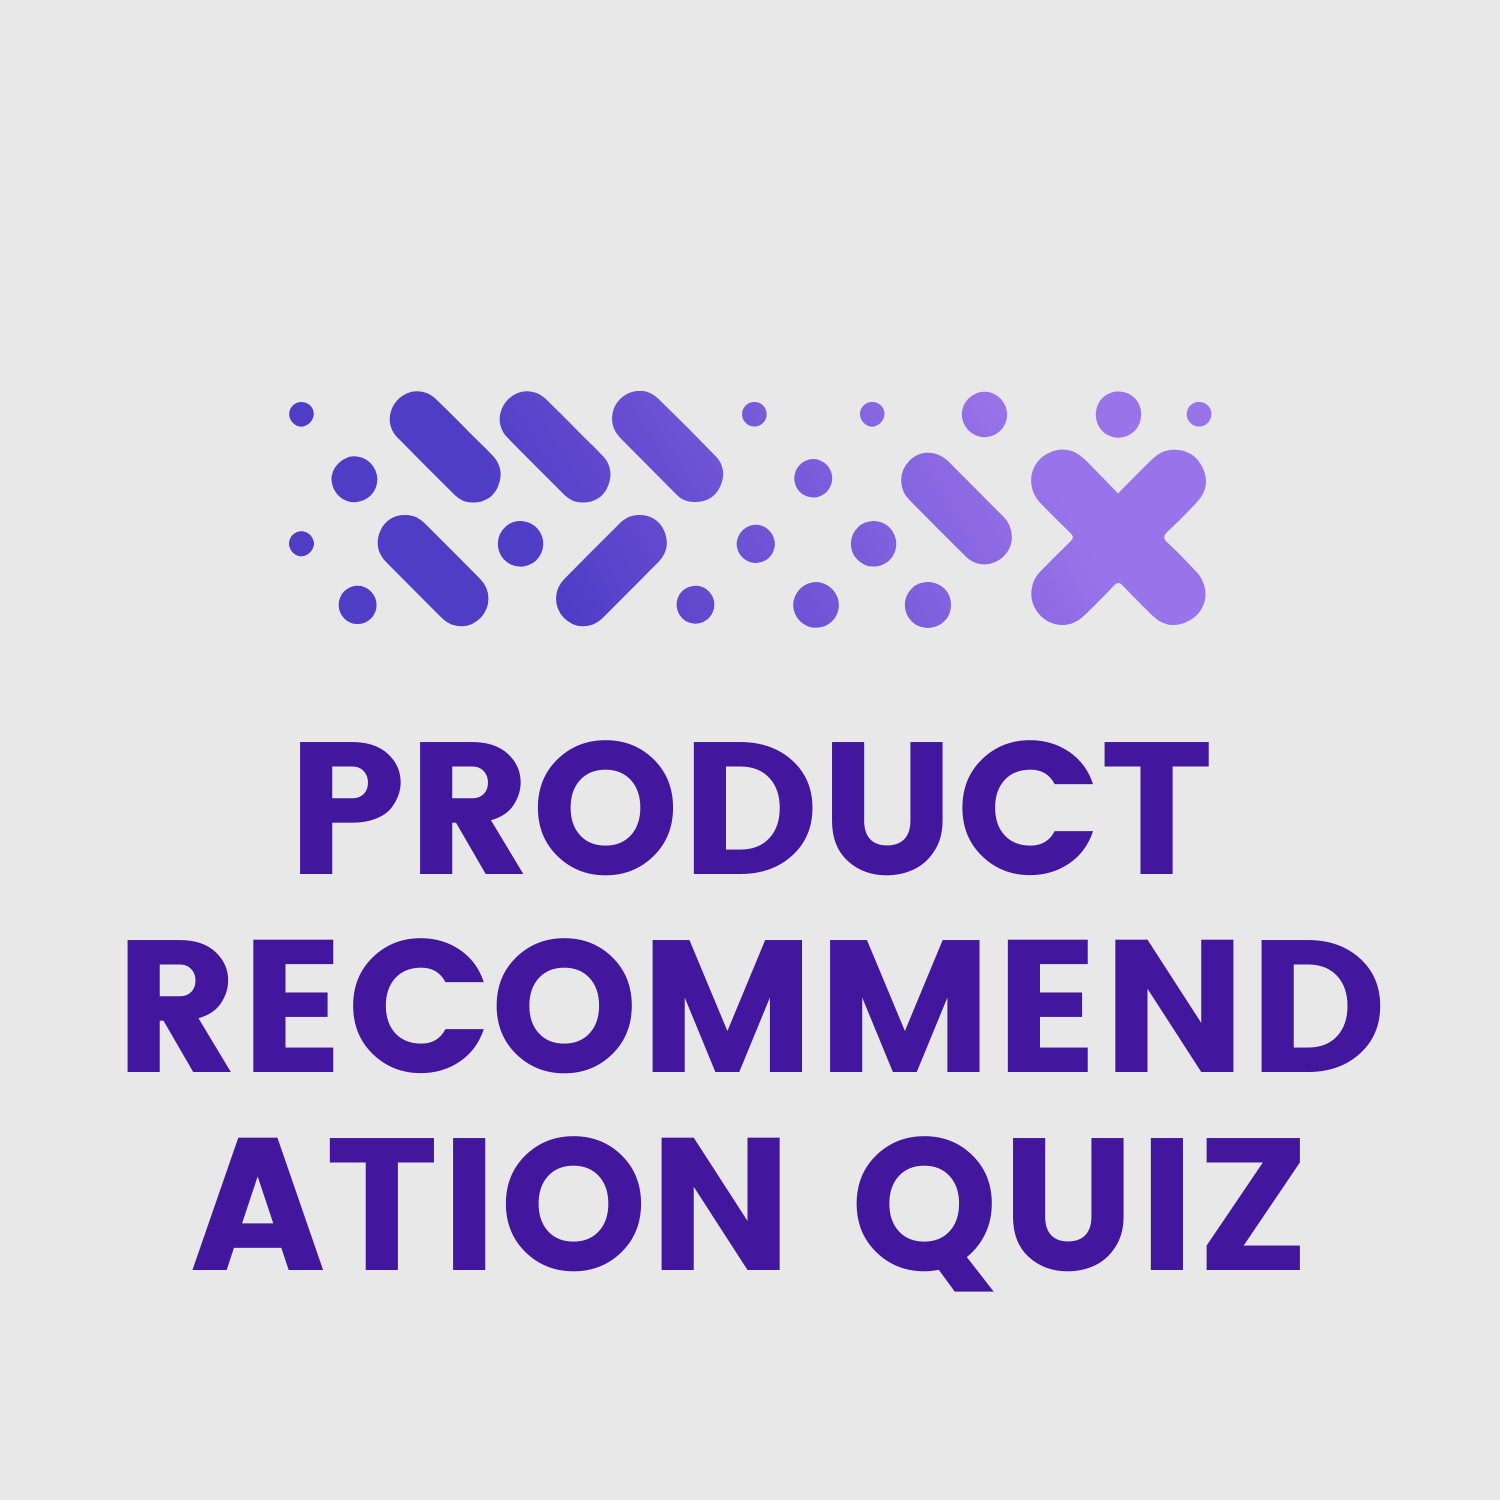 Product Recommendation Quiz